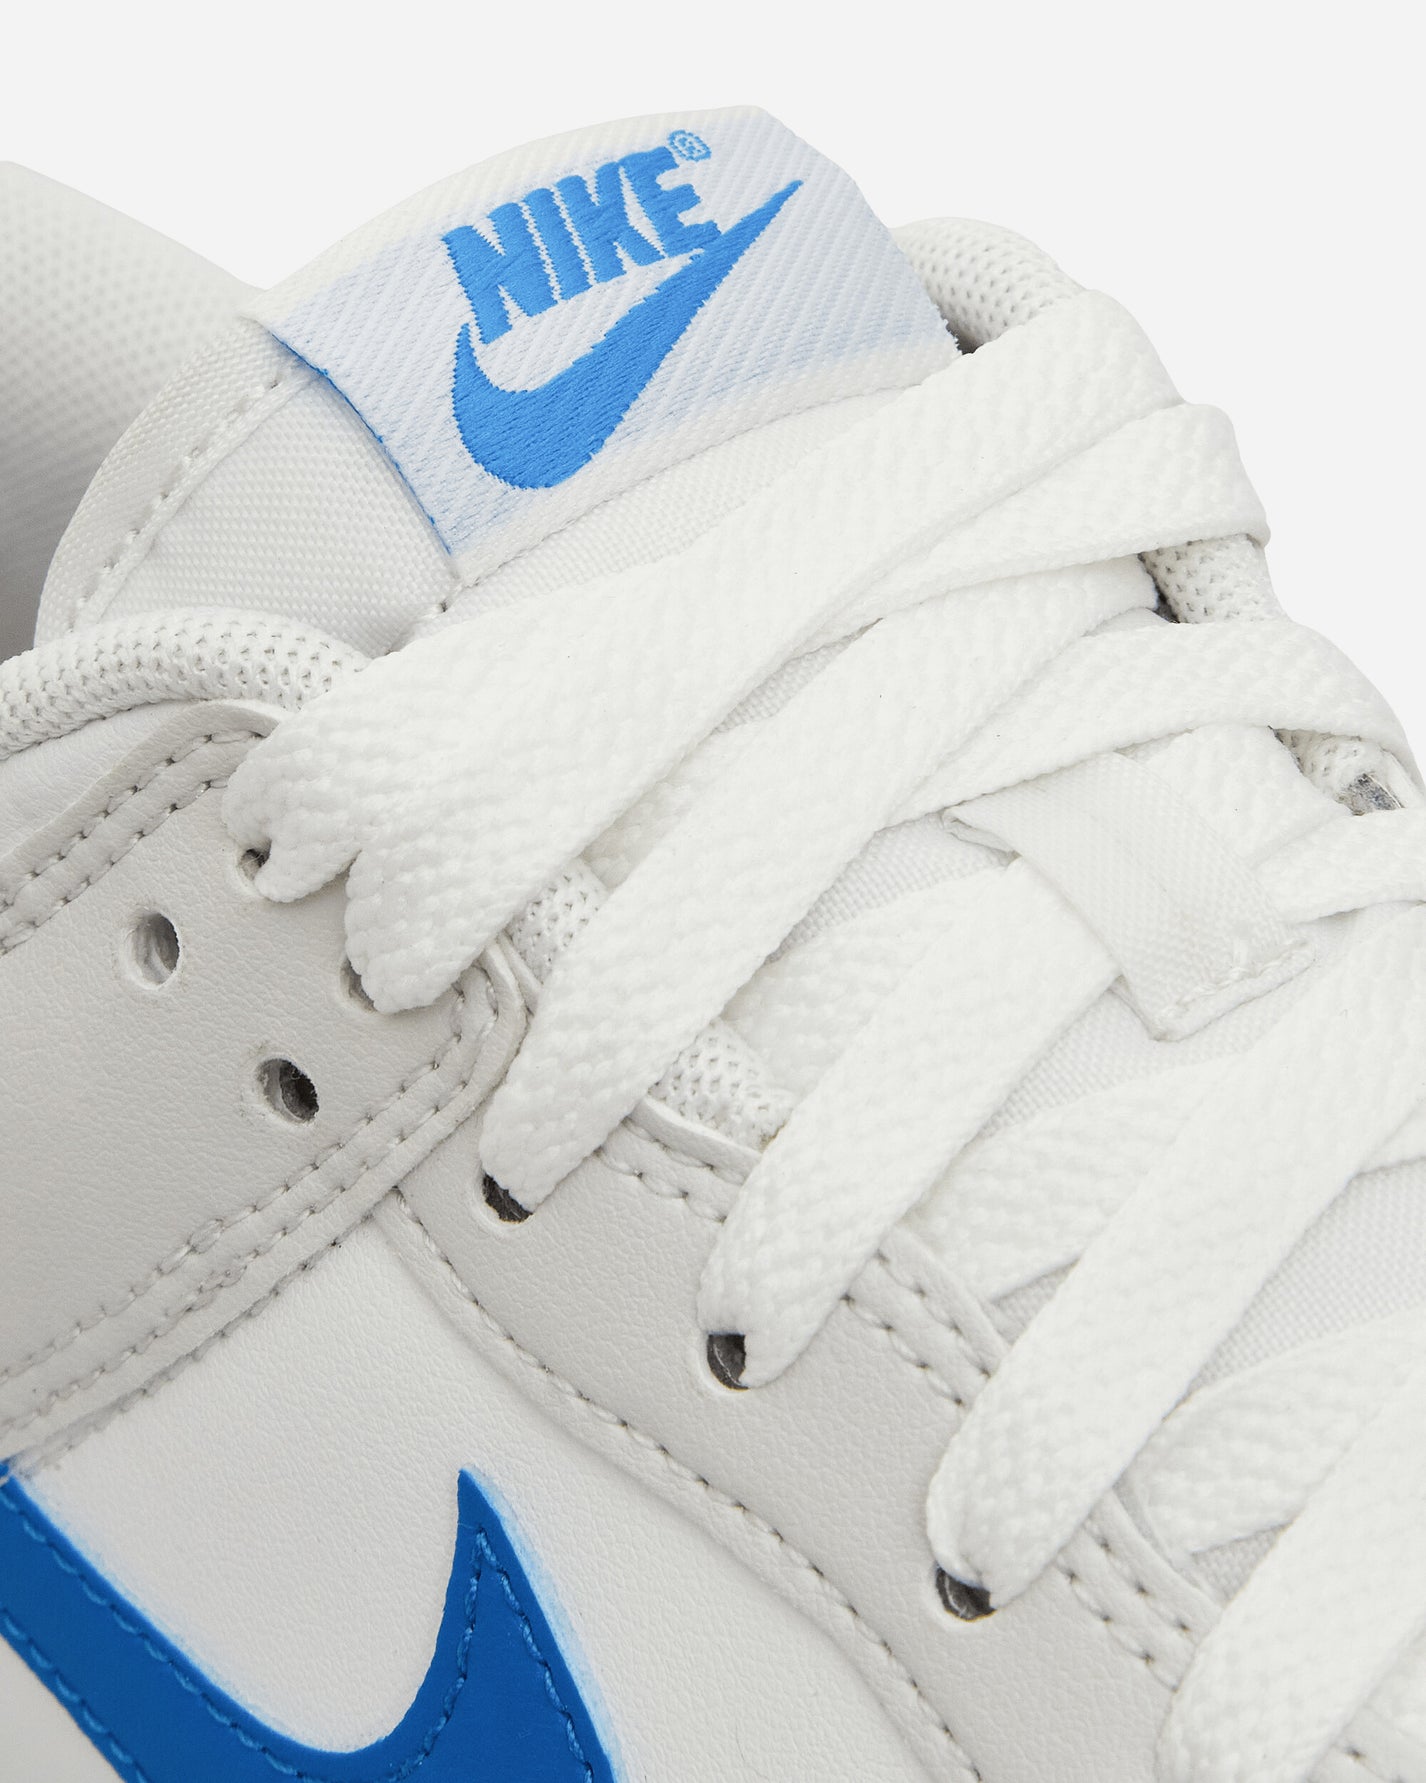 Nike Nike Dunk Low Retro Summit White/Photo Blue Sneakers Low DV0831-108